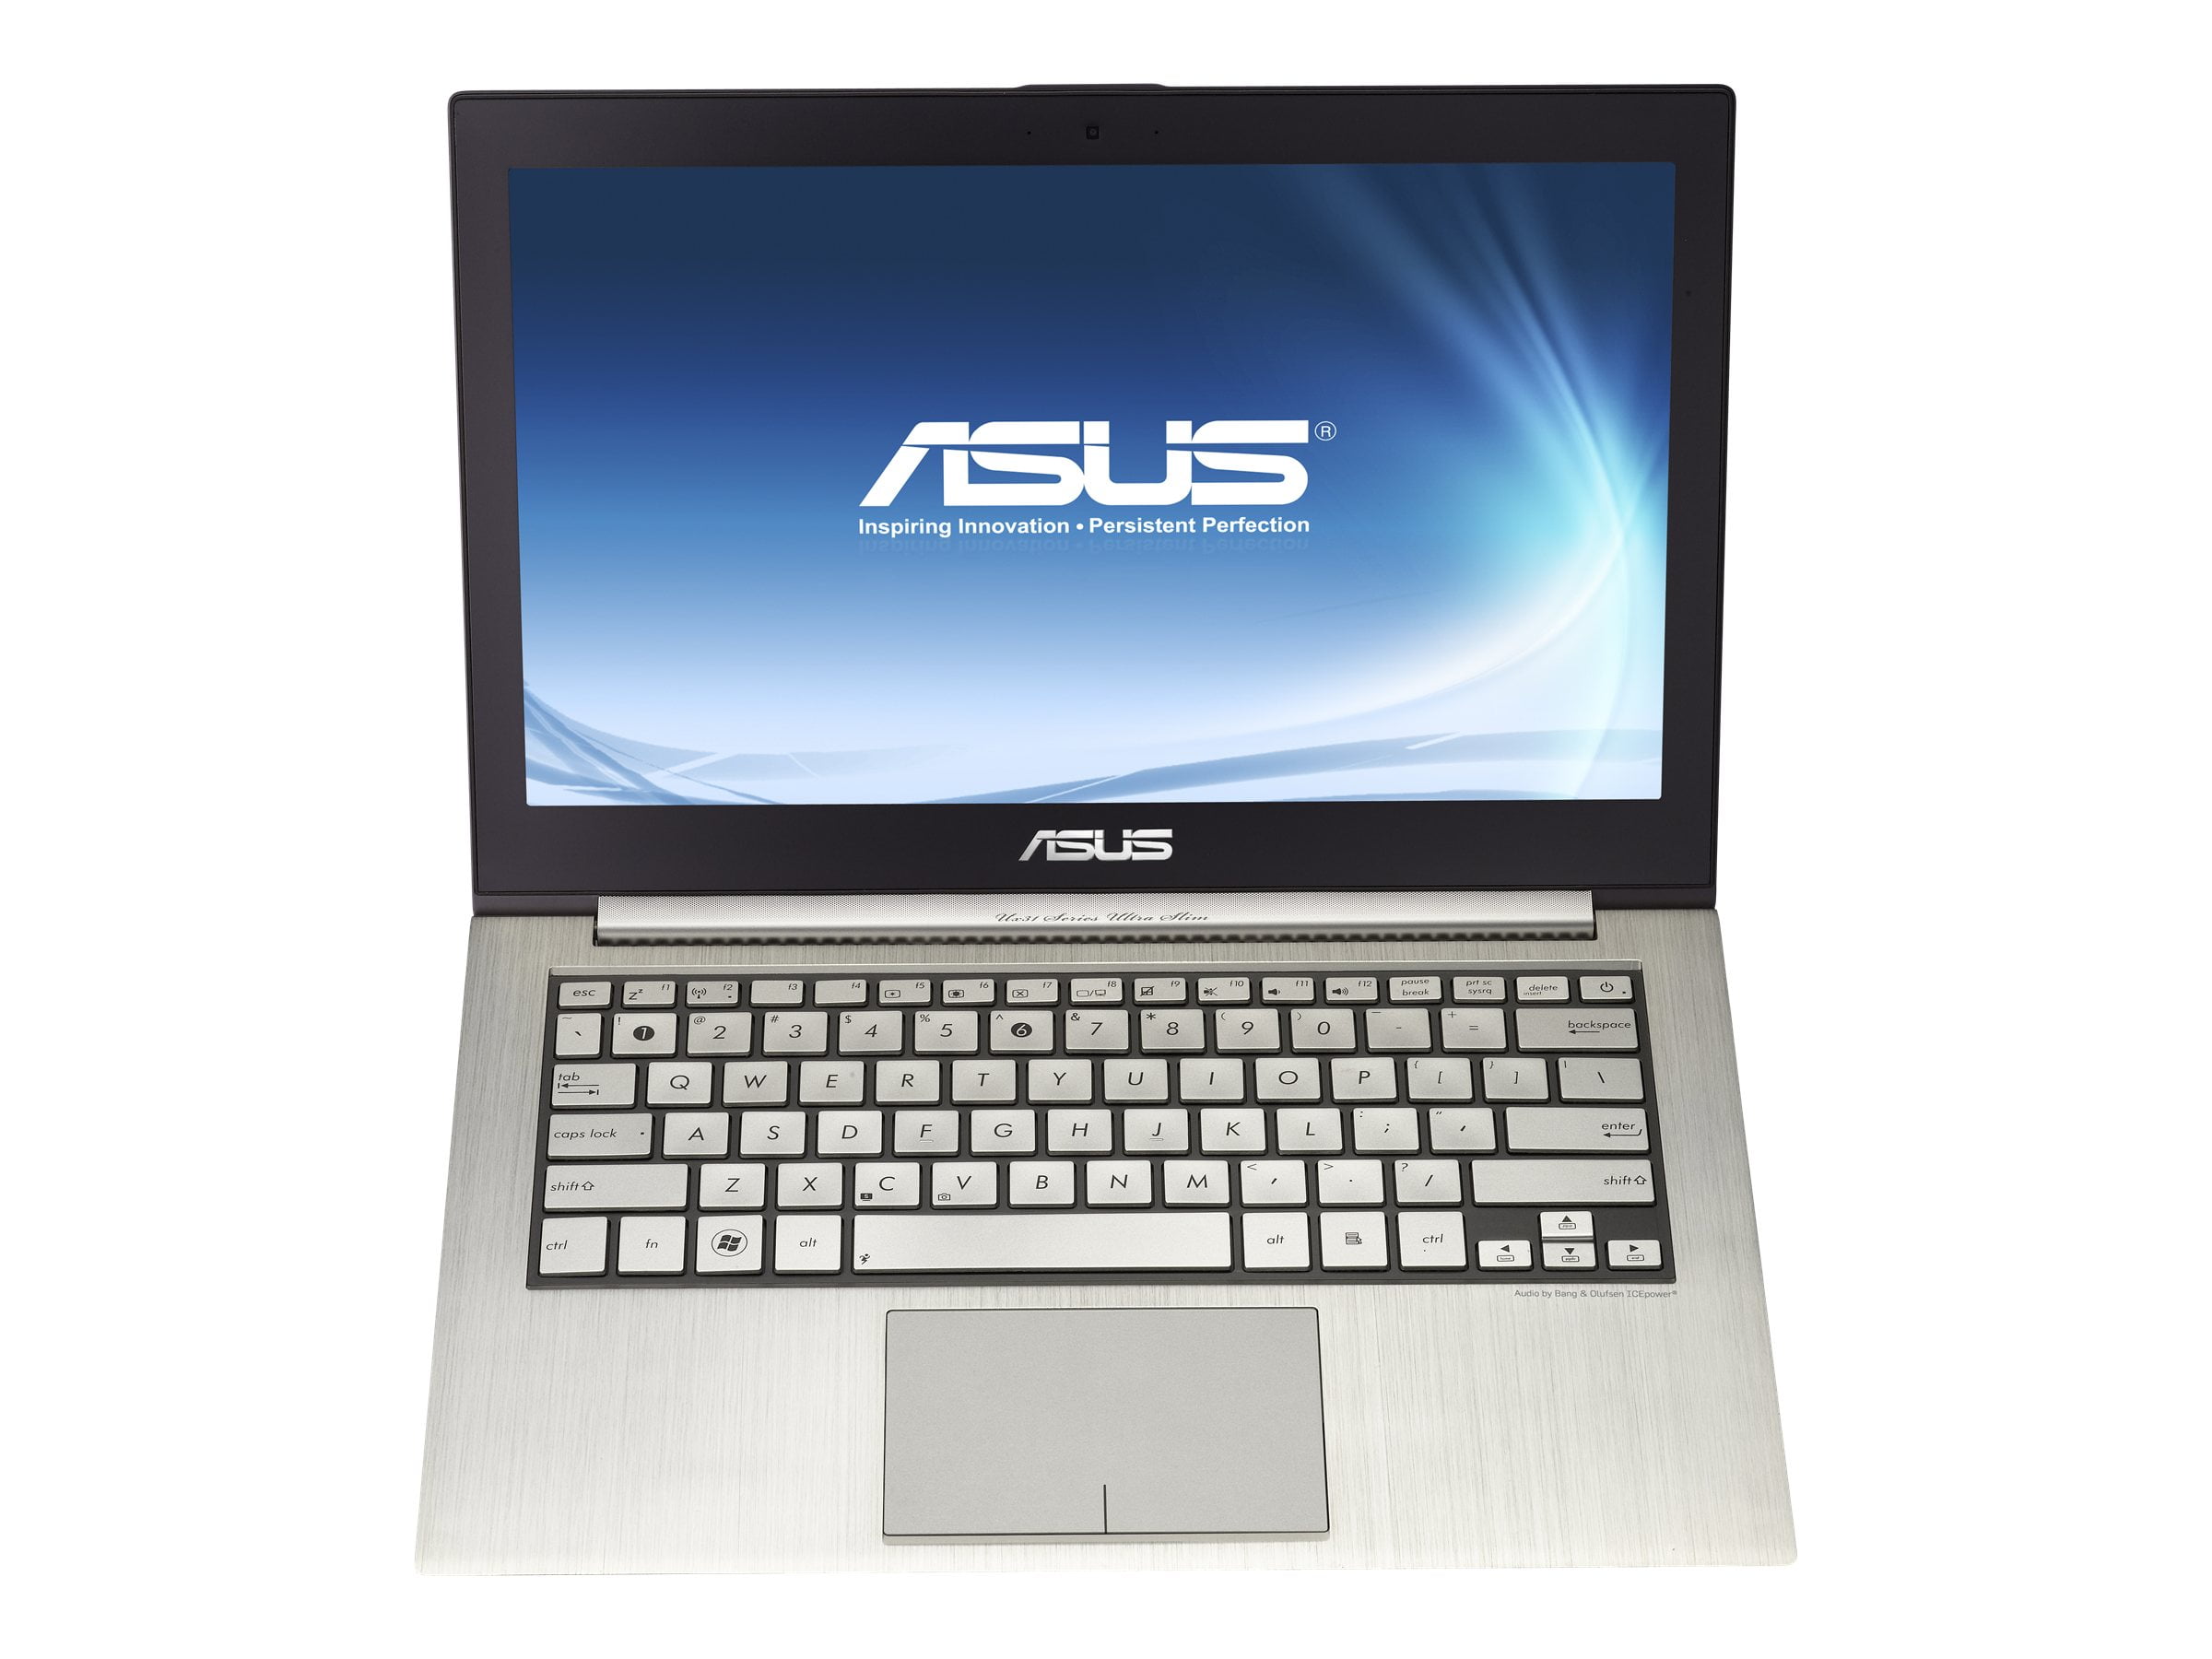 ASUS ZENBOOK UX31E-XB51 - Ultrabook Intel Core i5 2467M / 1.6 GHz - Win 7 Pro 64-bit - HD Graphics 3000 - 4 GB RAM - 128 GB SSD - 13.3" 1600 x 900 (HD+) - silver aluminum - Walmart.com